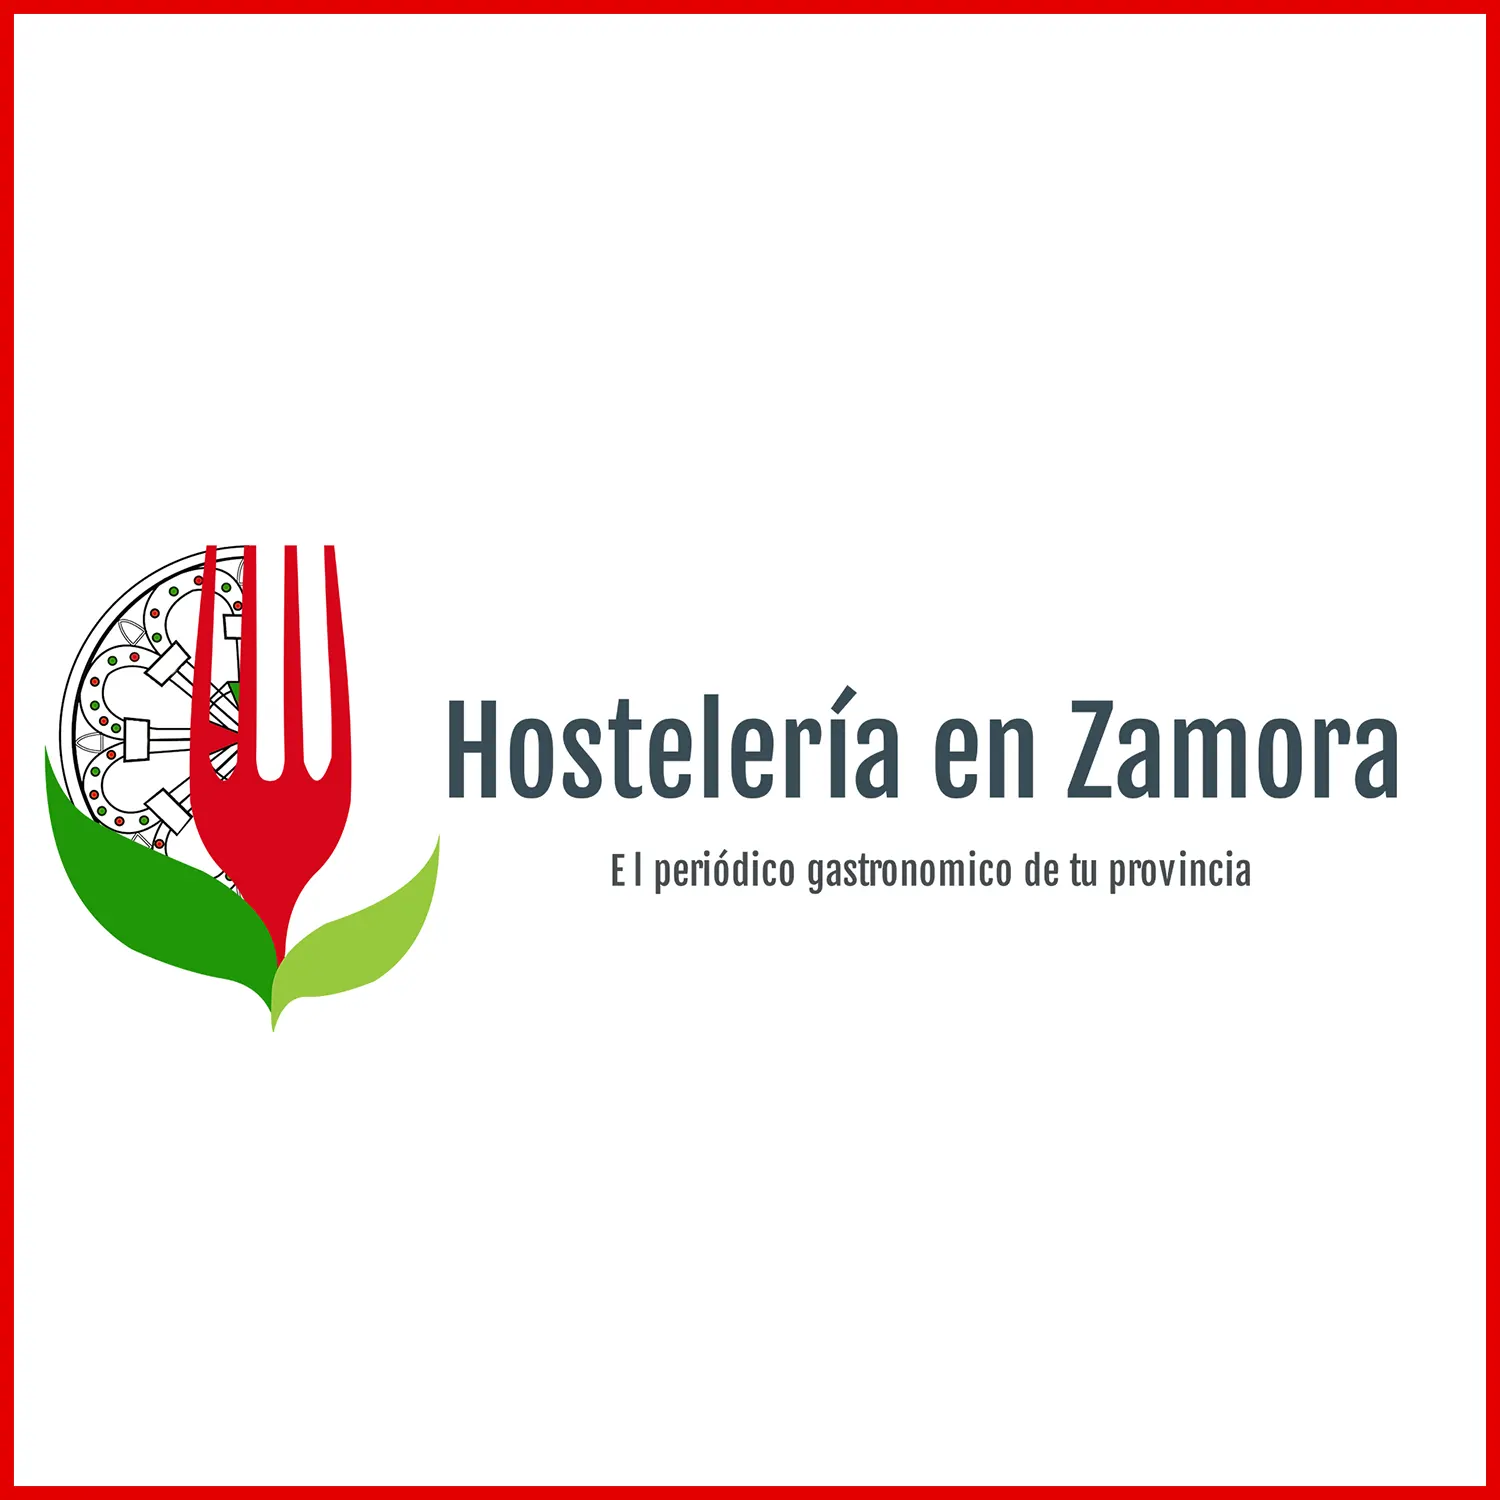 Hostelería en Zamora hosteleriaenzamora.com